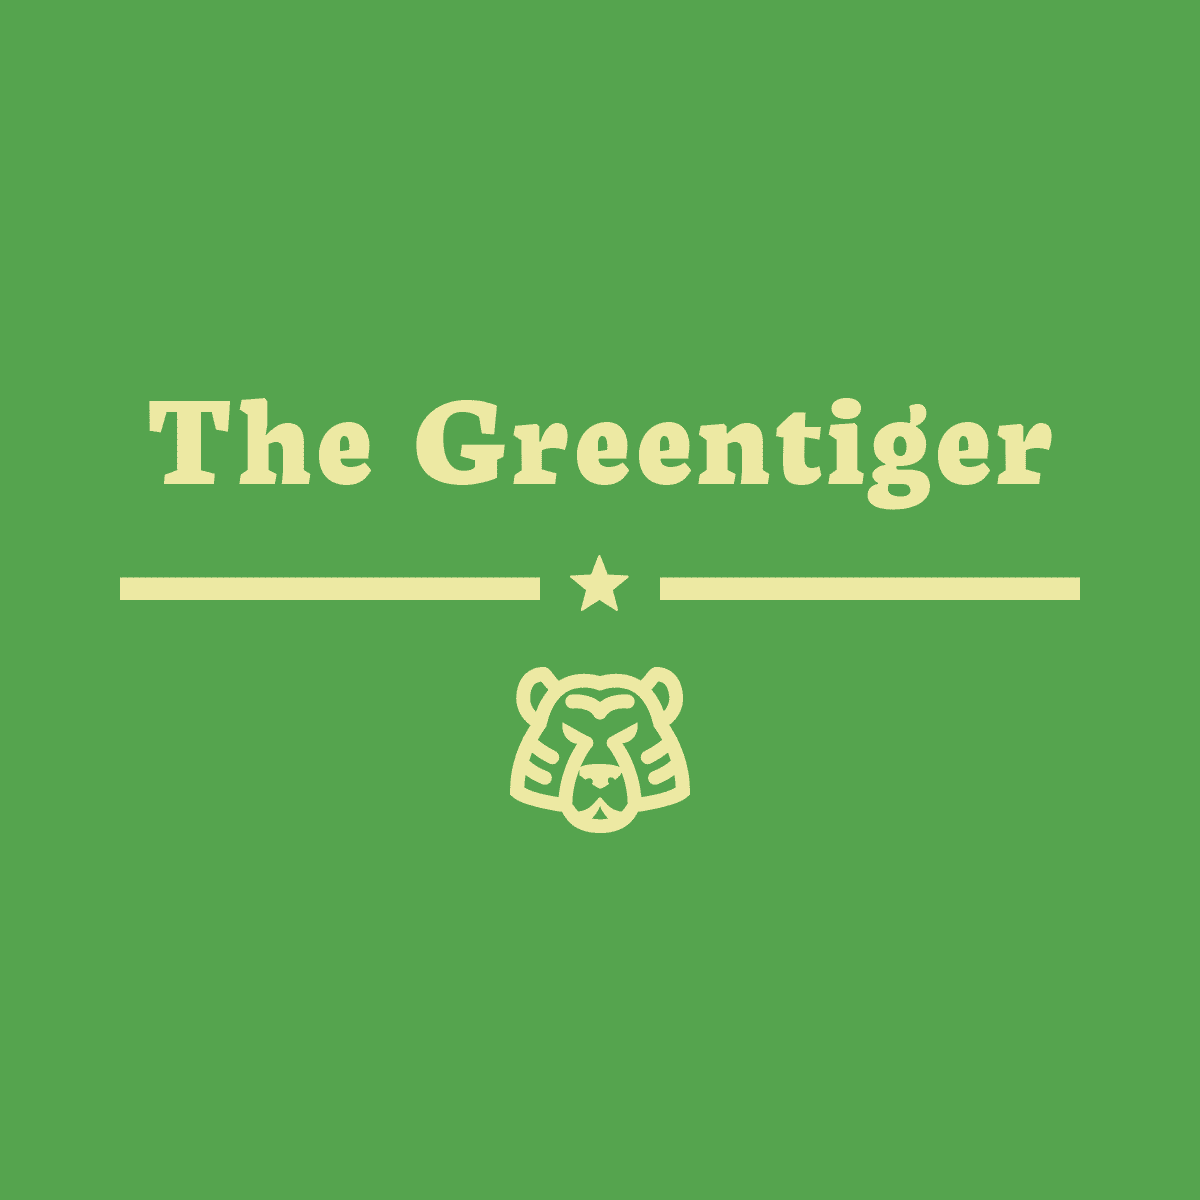 The Greentiger